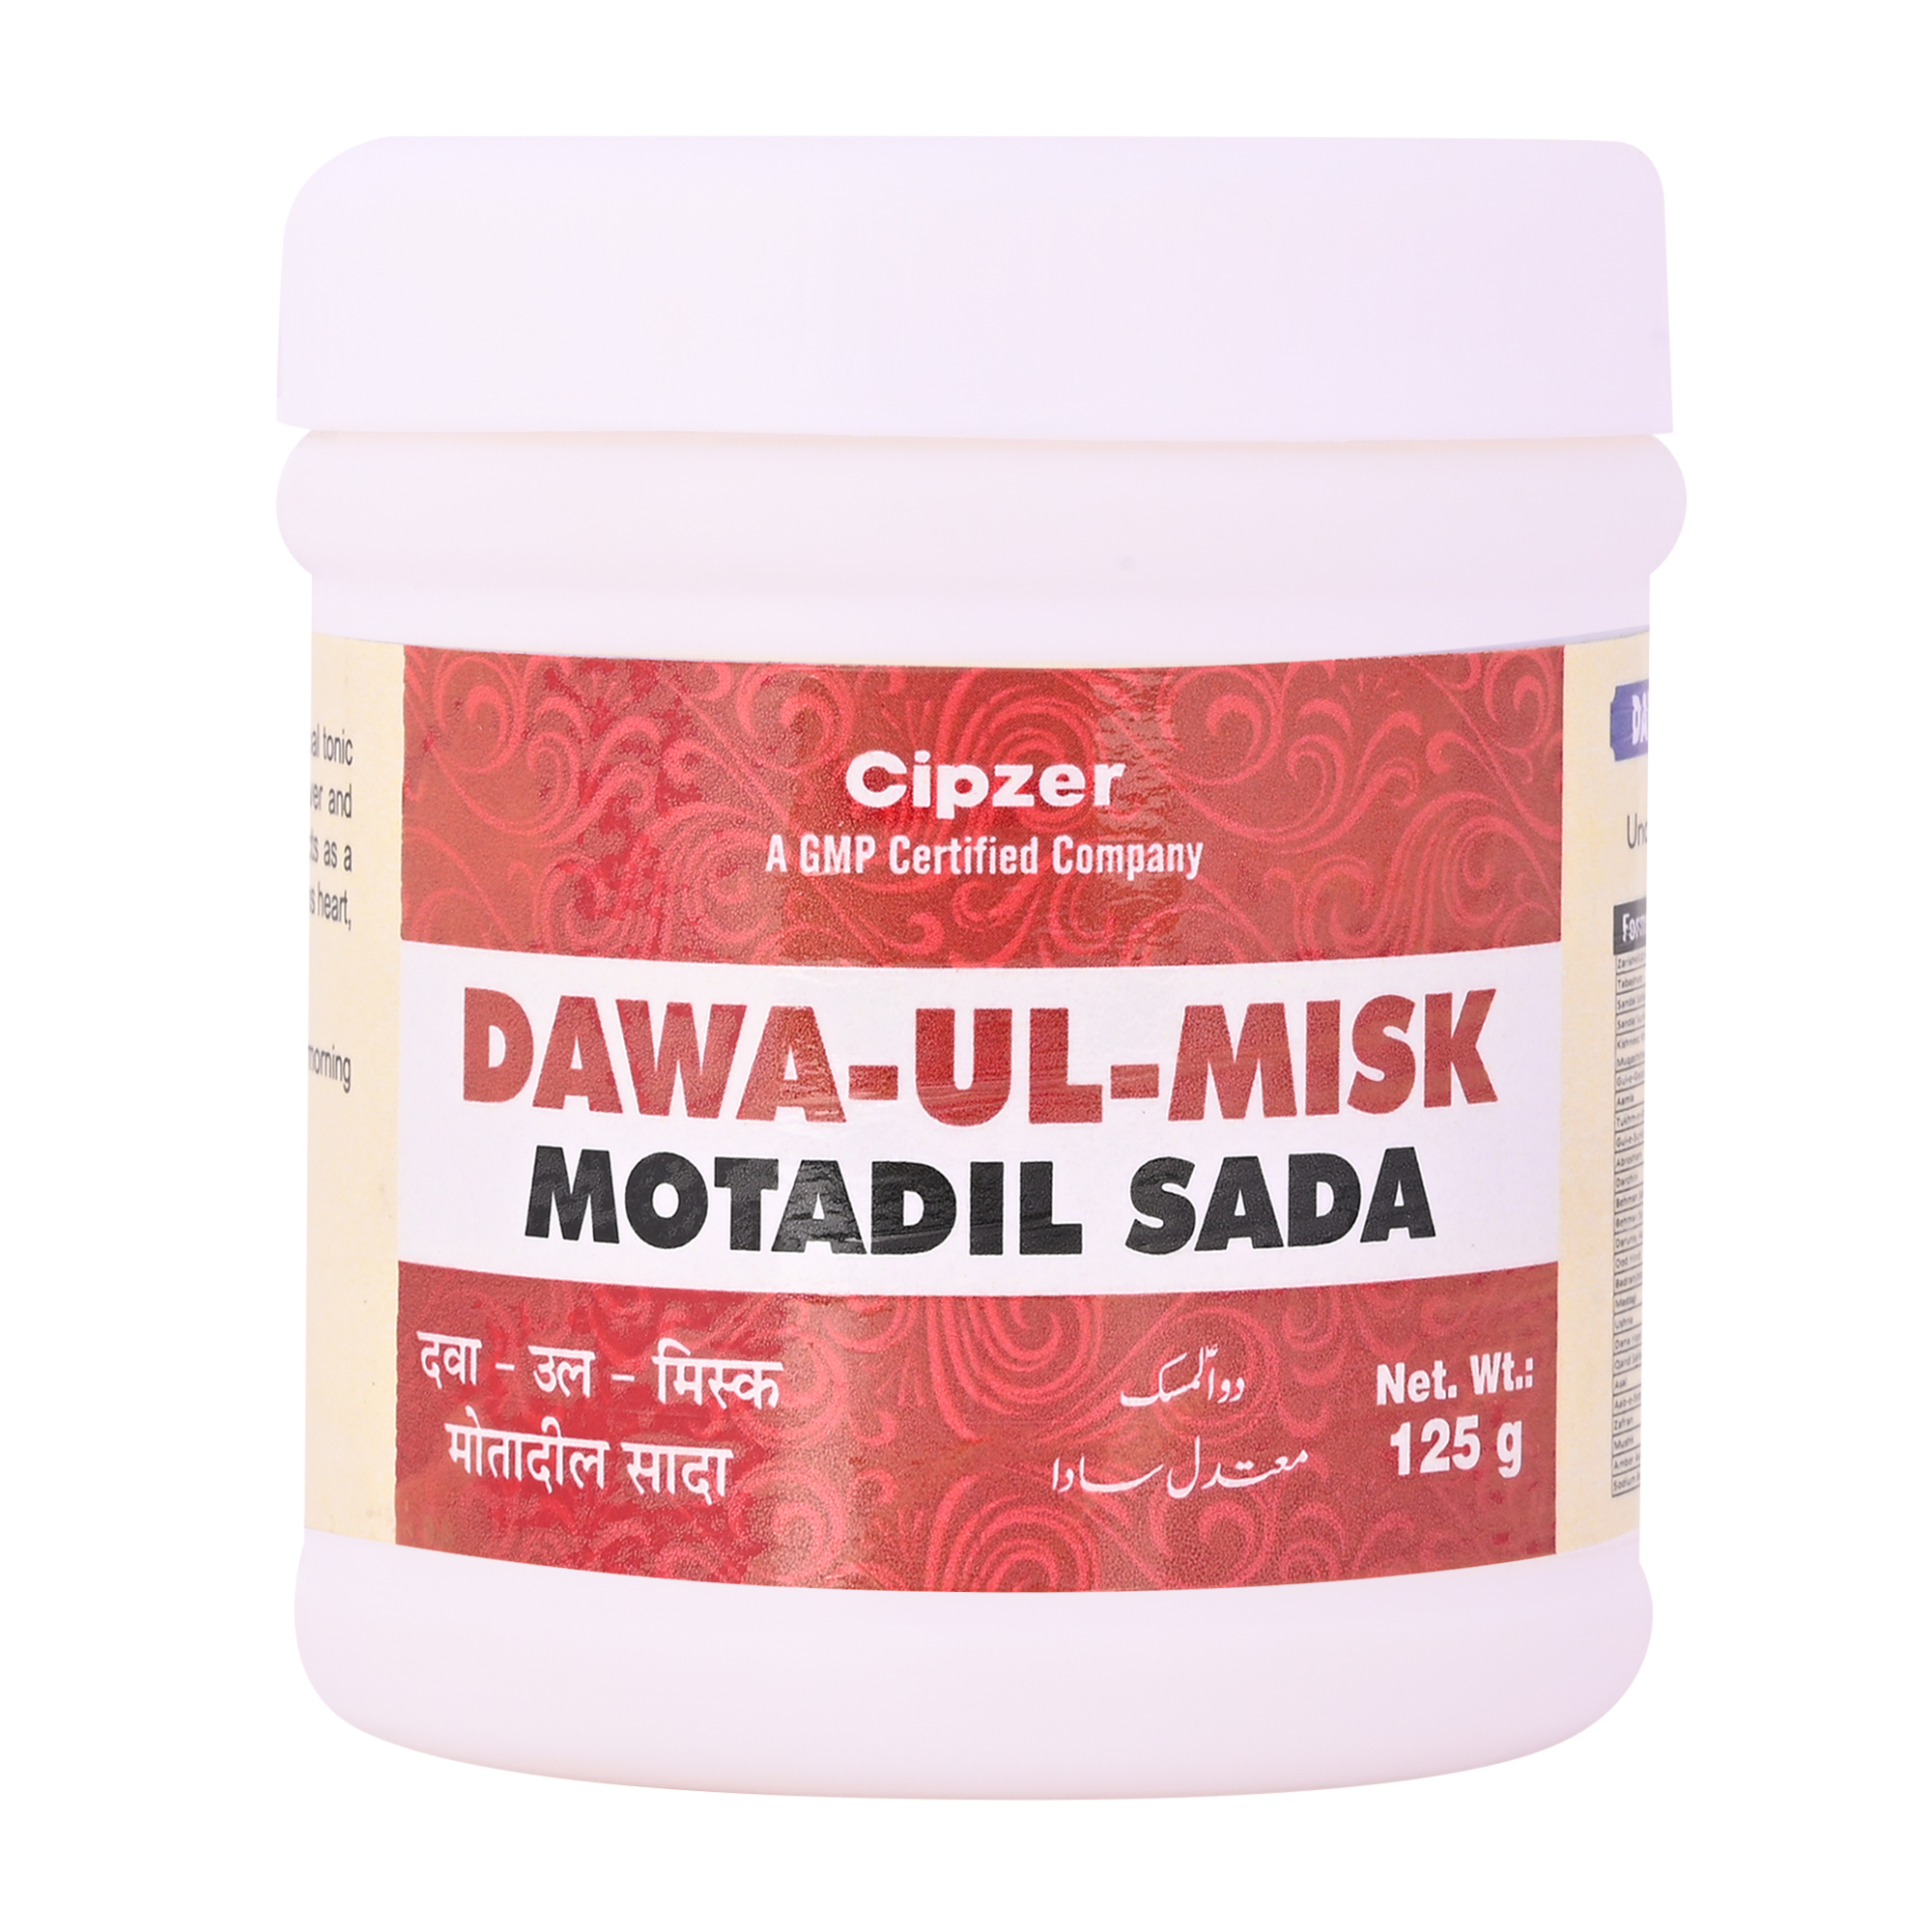 Buy Cipzer Dawaul Misk Motadil Sada at Best Price Online